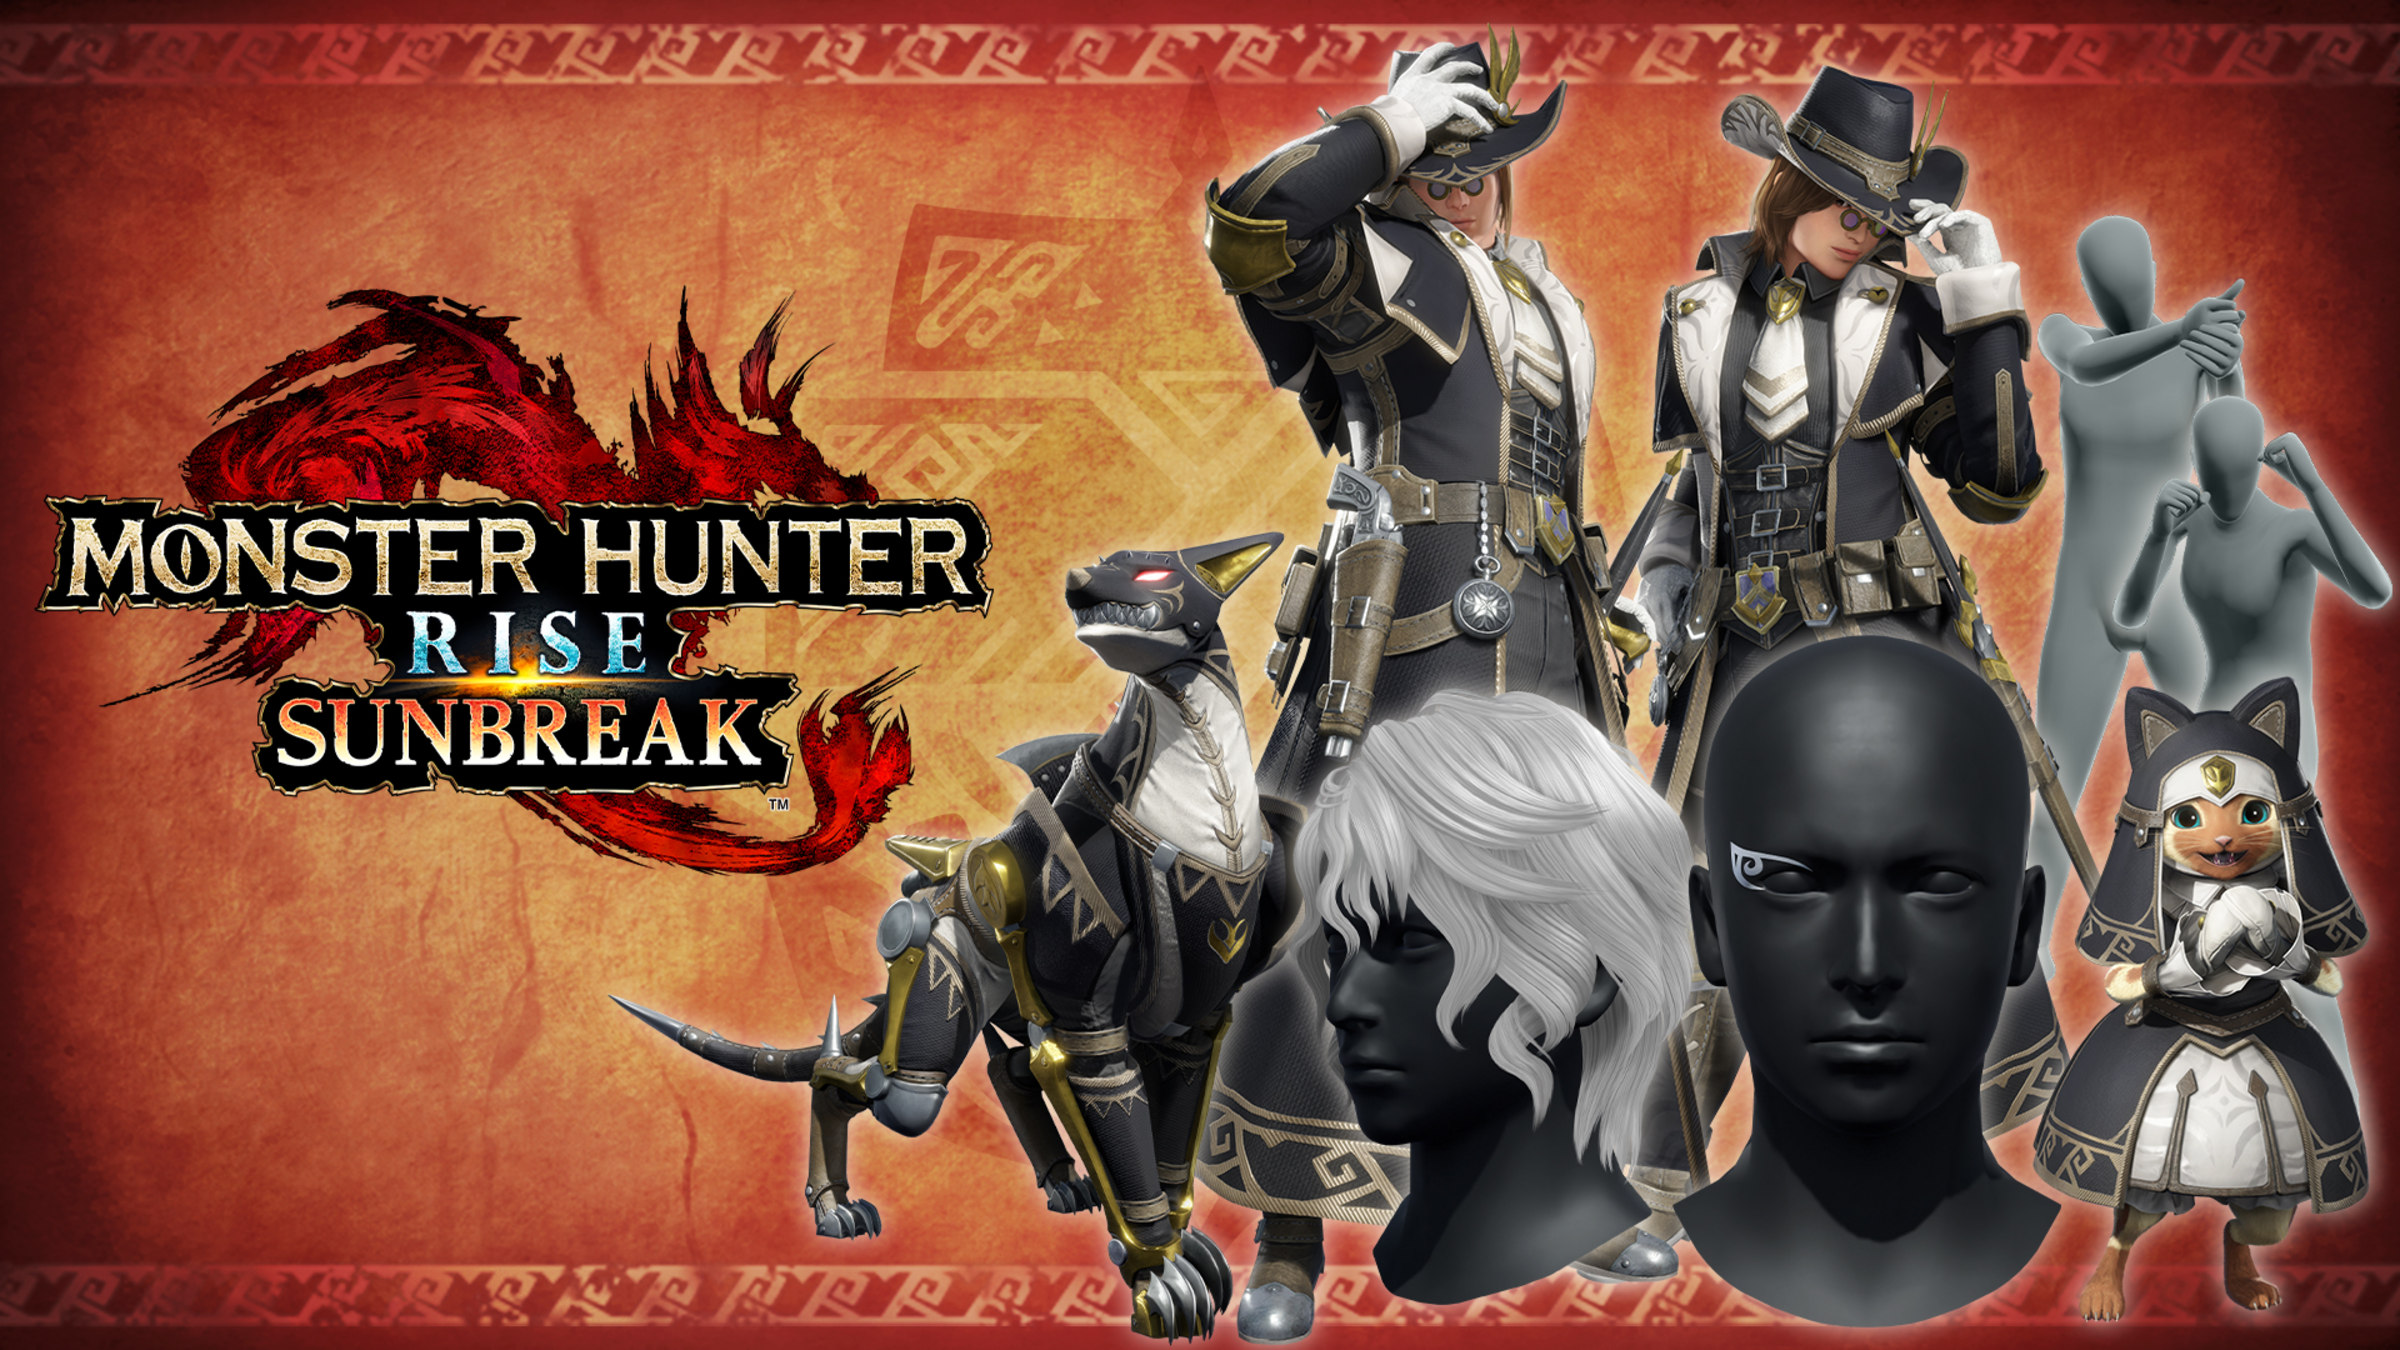 Buy Monster Hunter Rise: Sunbreak from the Humble Store